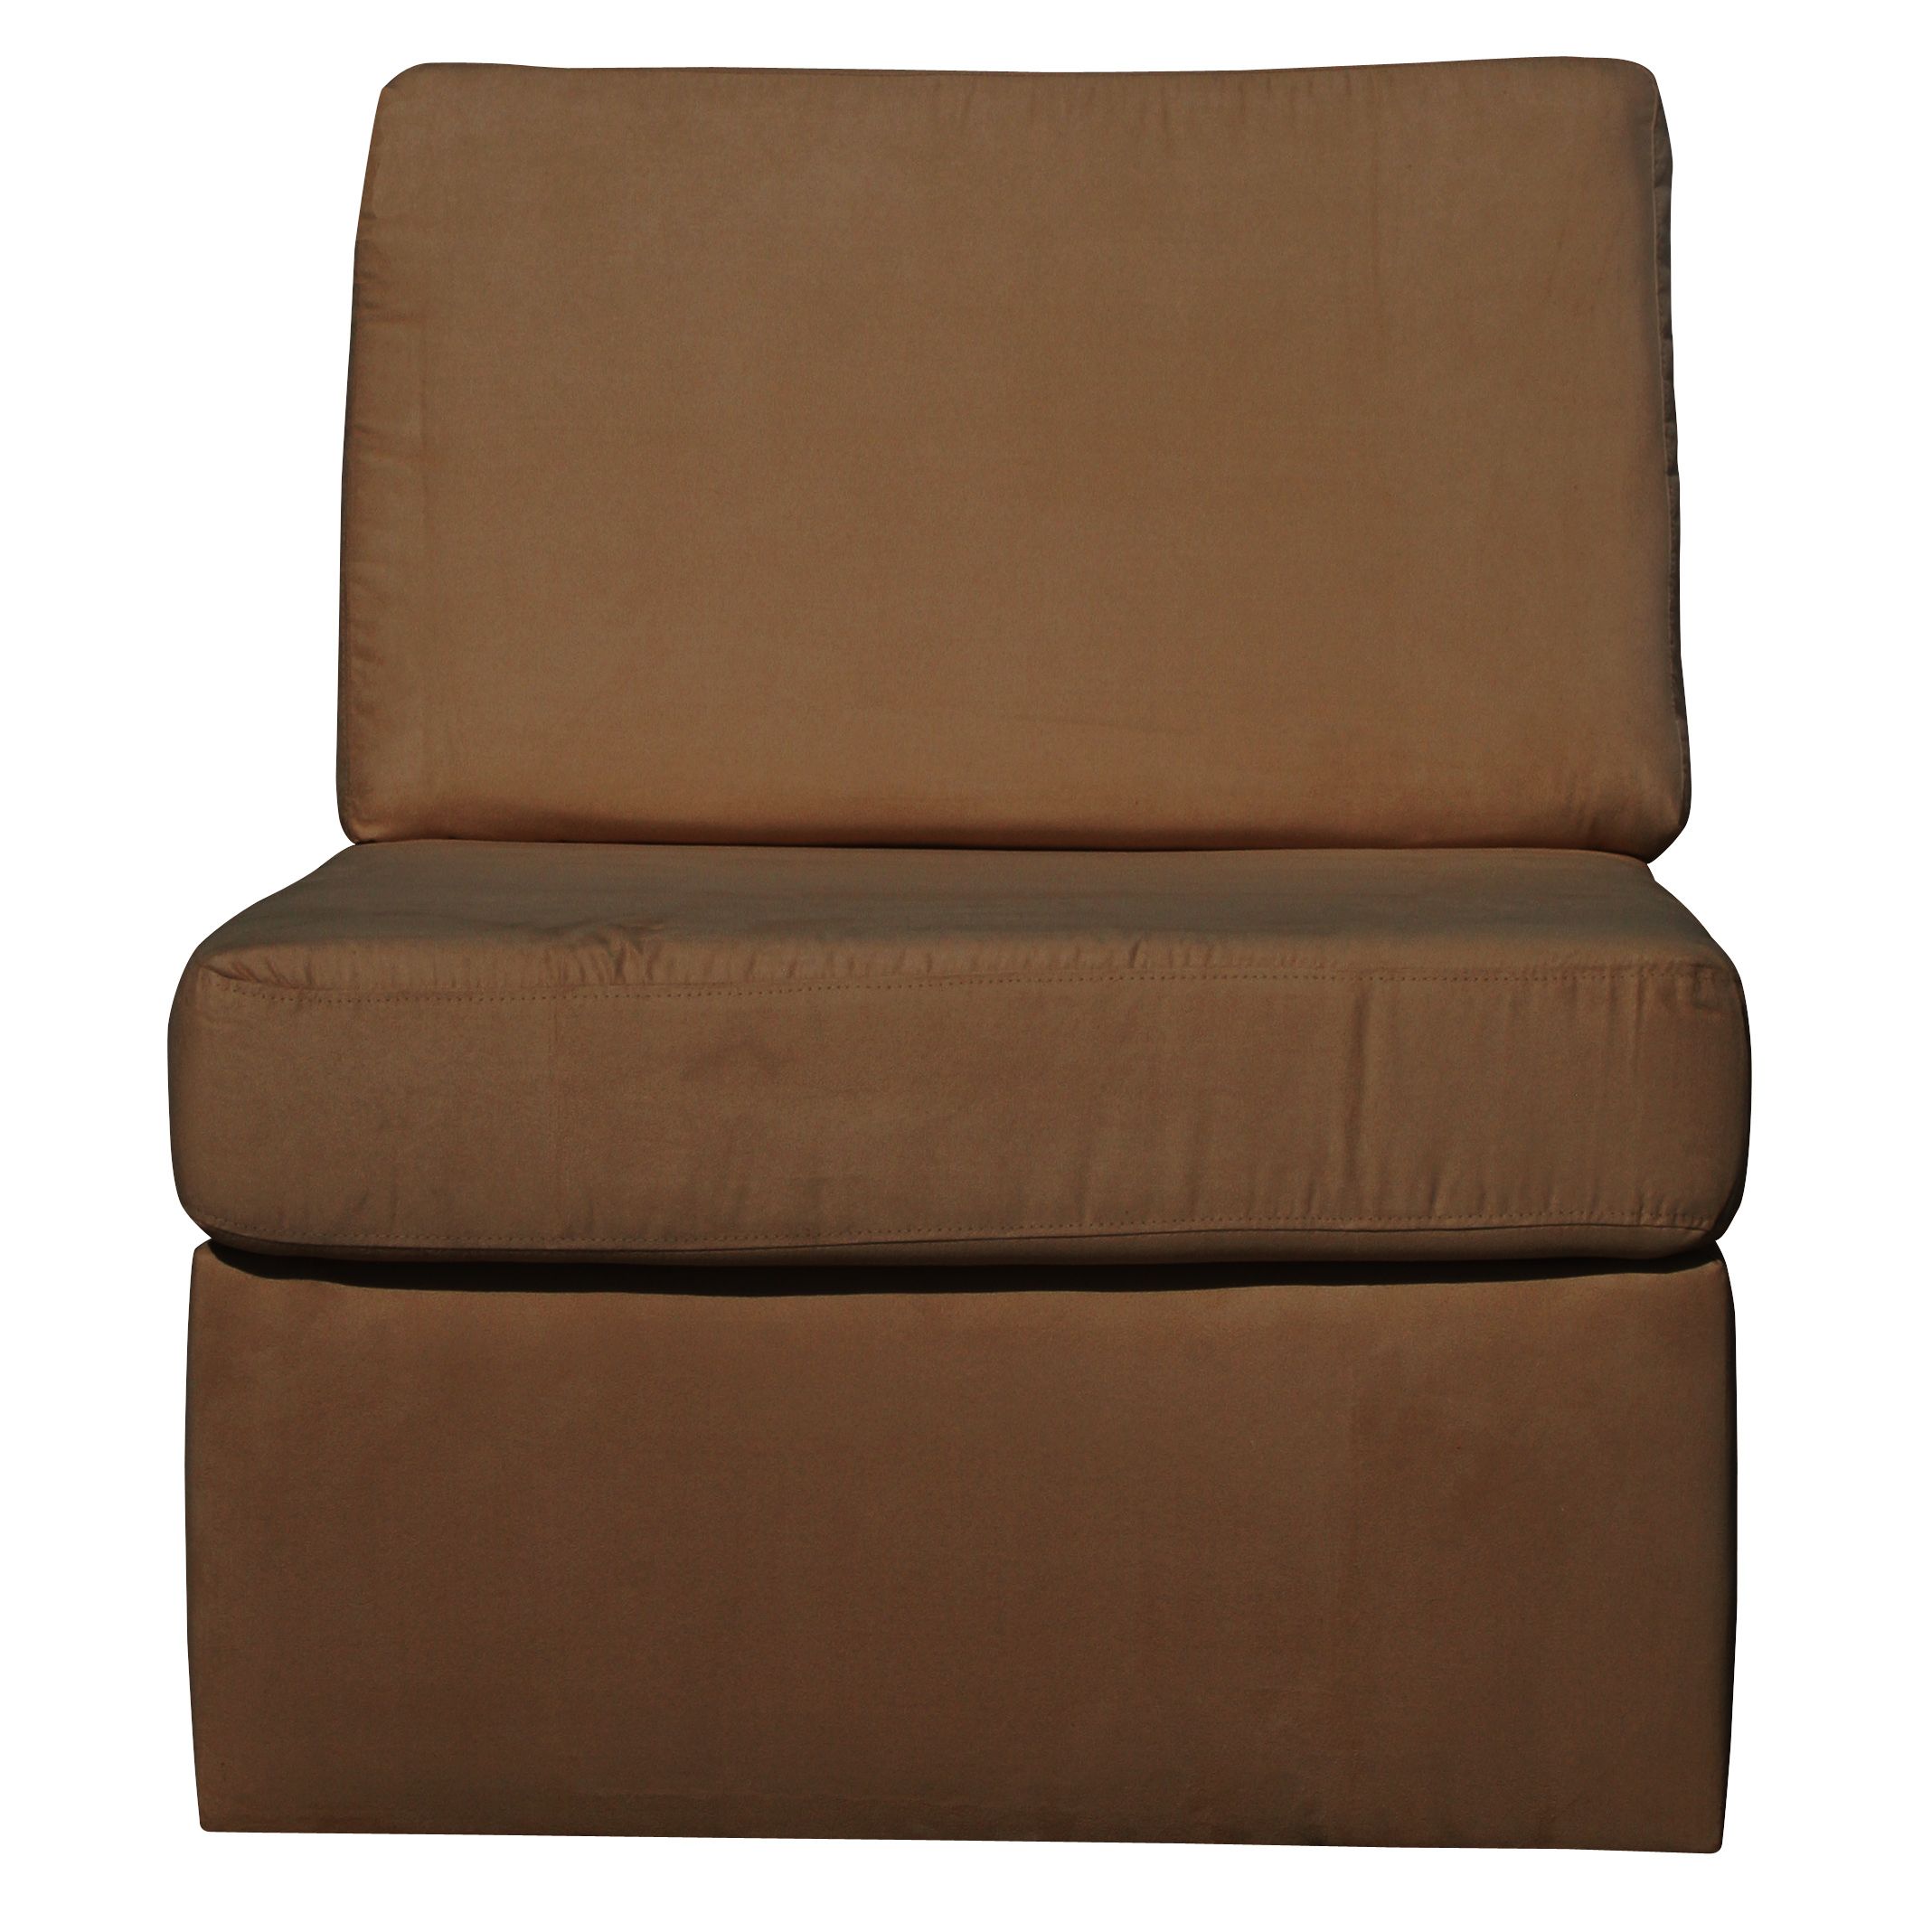 John Lewis Barney Chair Bed, Nutmeg at John Lewis